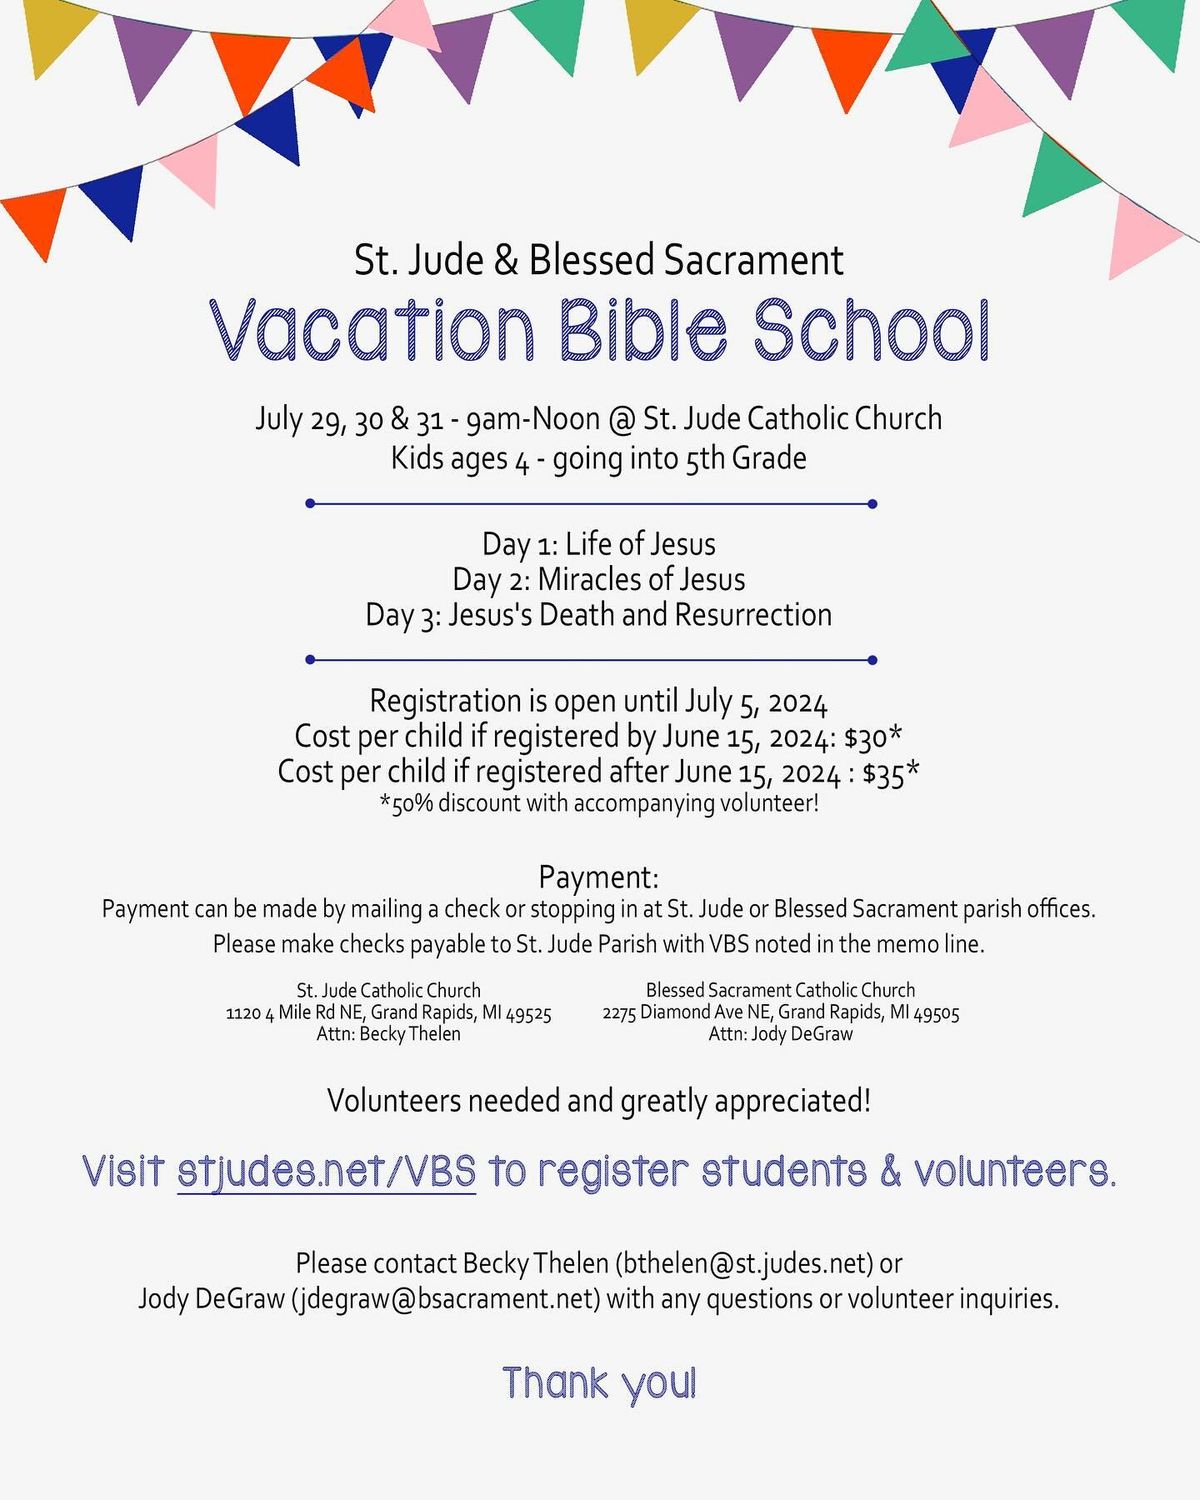 Vacation Bible School 2024 - The Life of Jesus